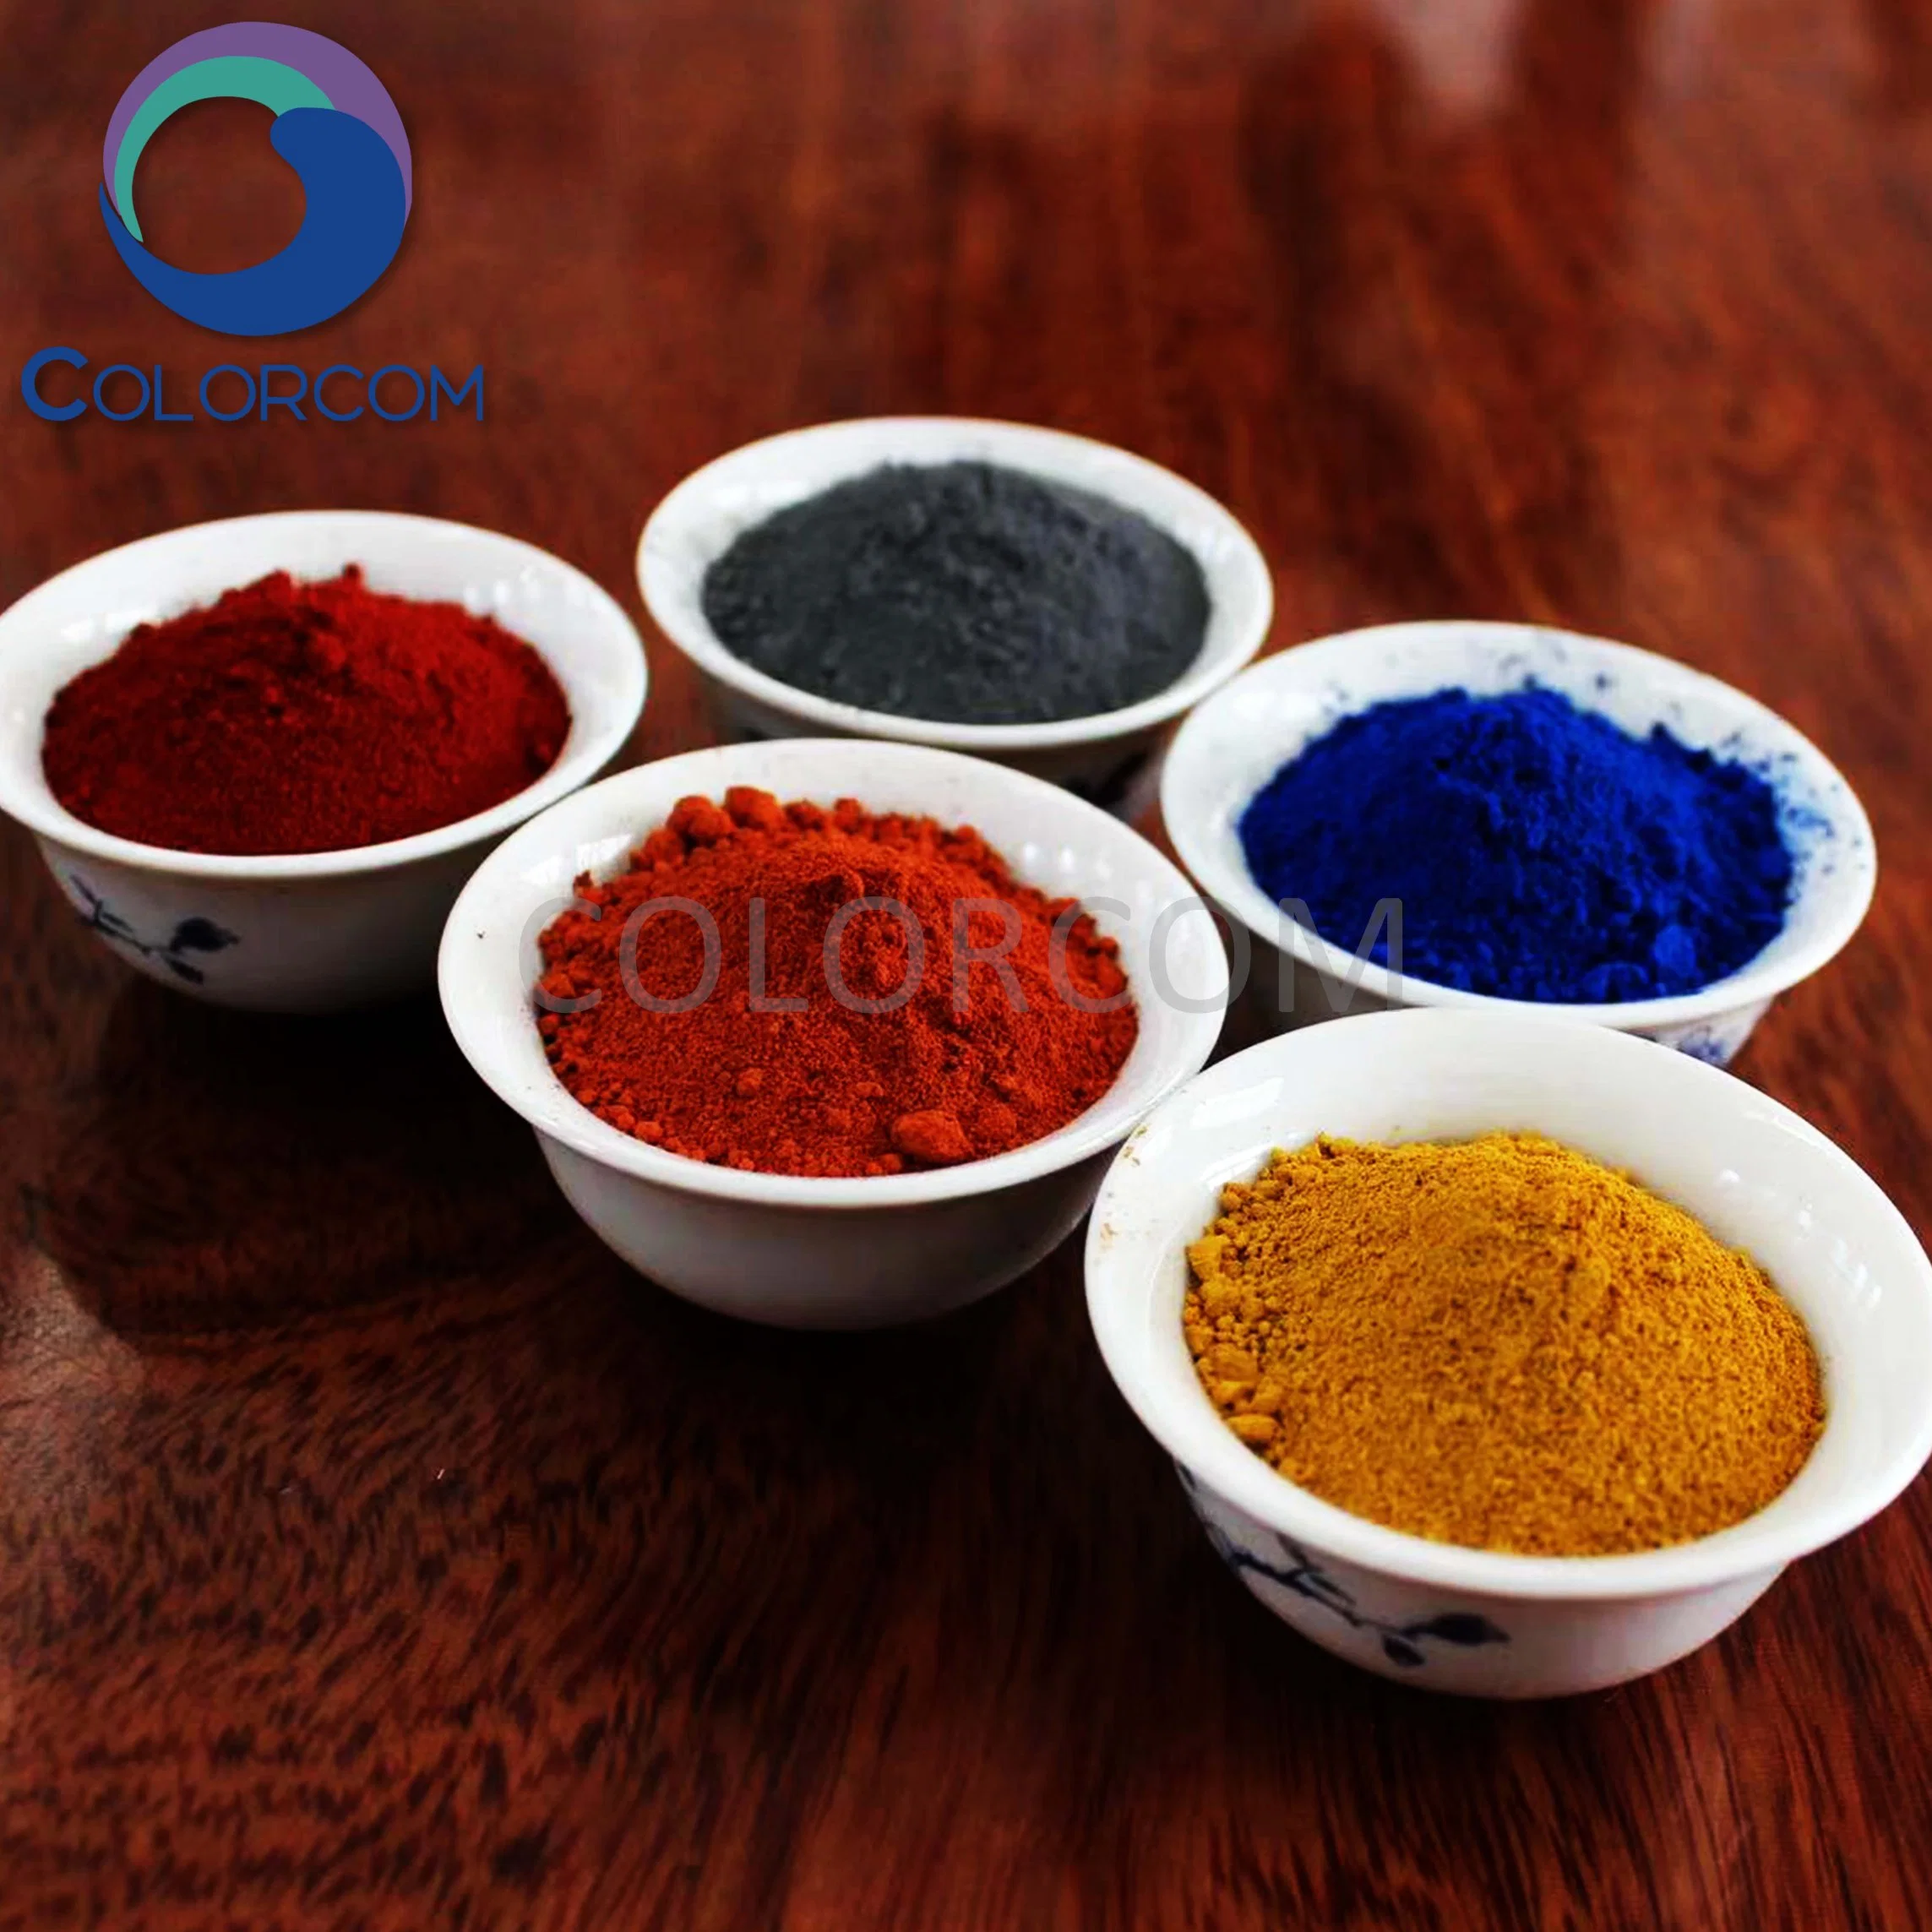 Iron Oxide Yellow 313 Inorganic Pigment Yellow Powder for Plastic and Paint